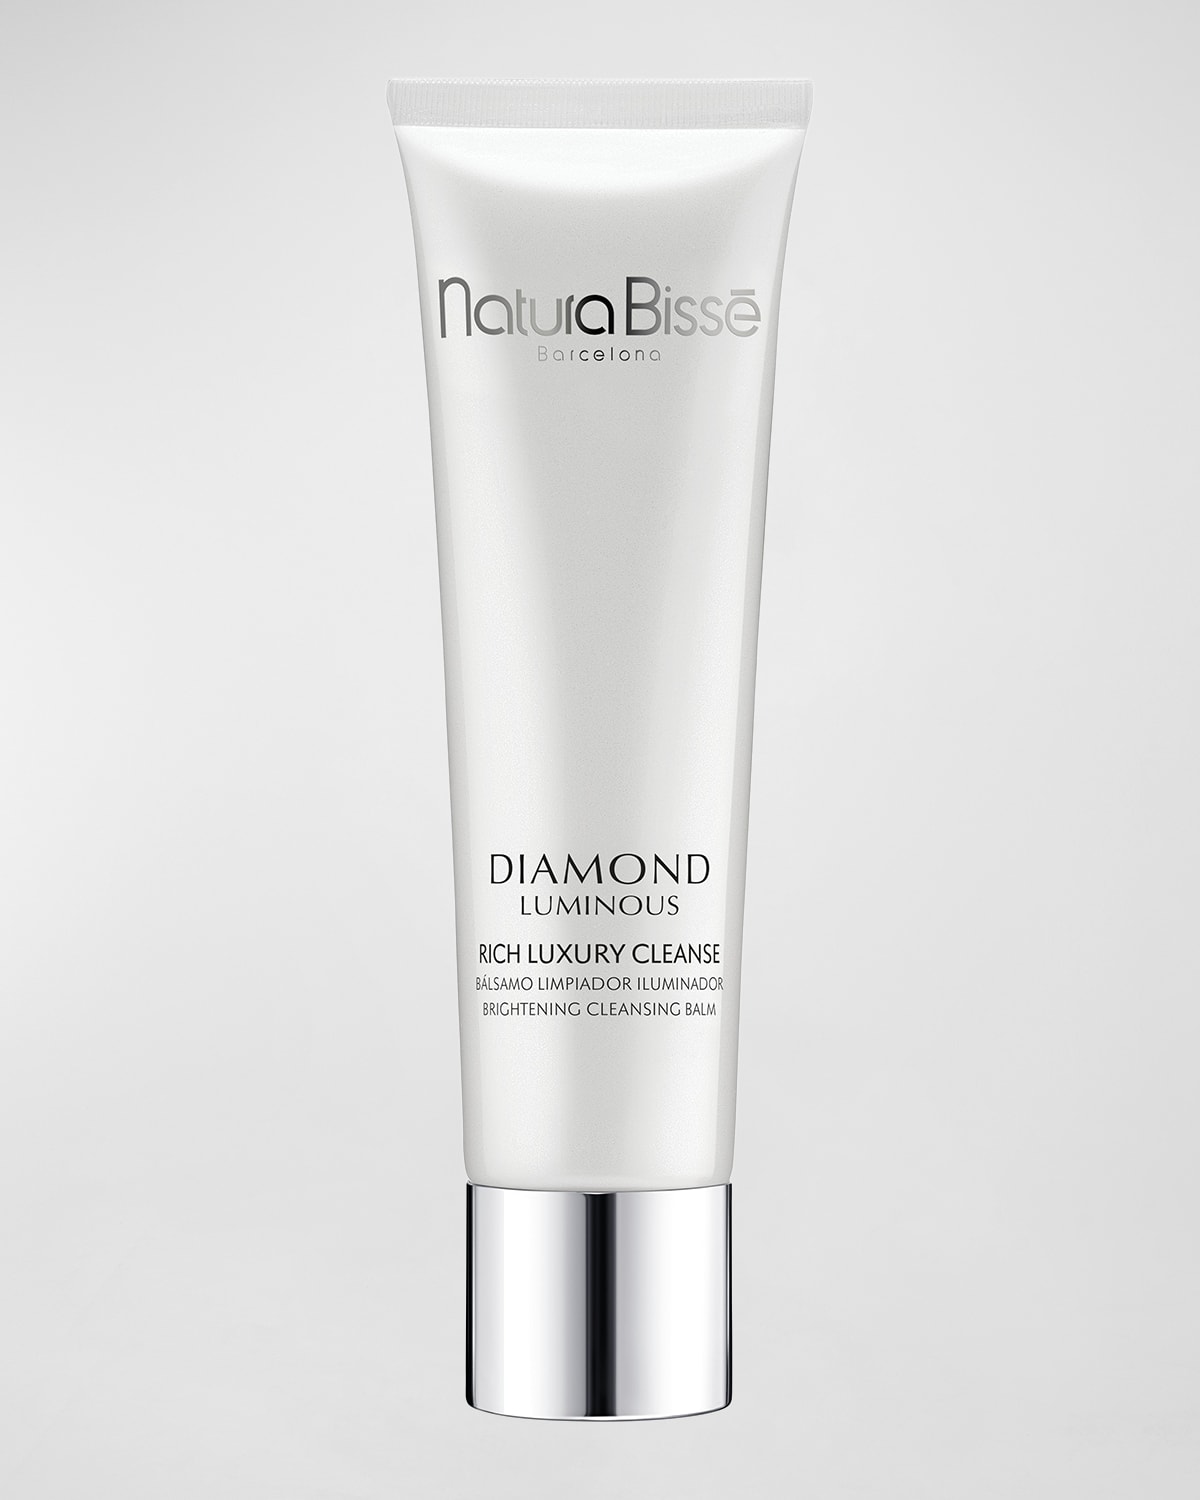 Diamond Luminous Rich Luxury Cleanse, 3.5 oz.